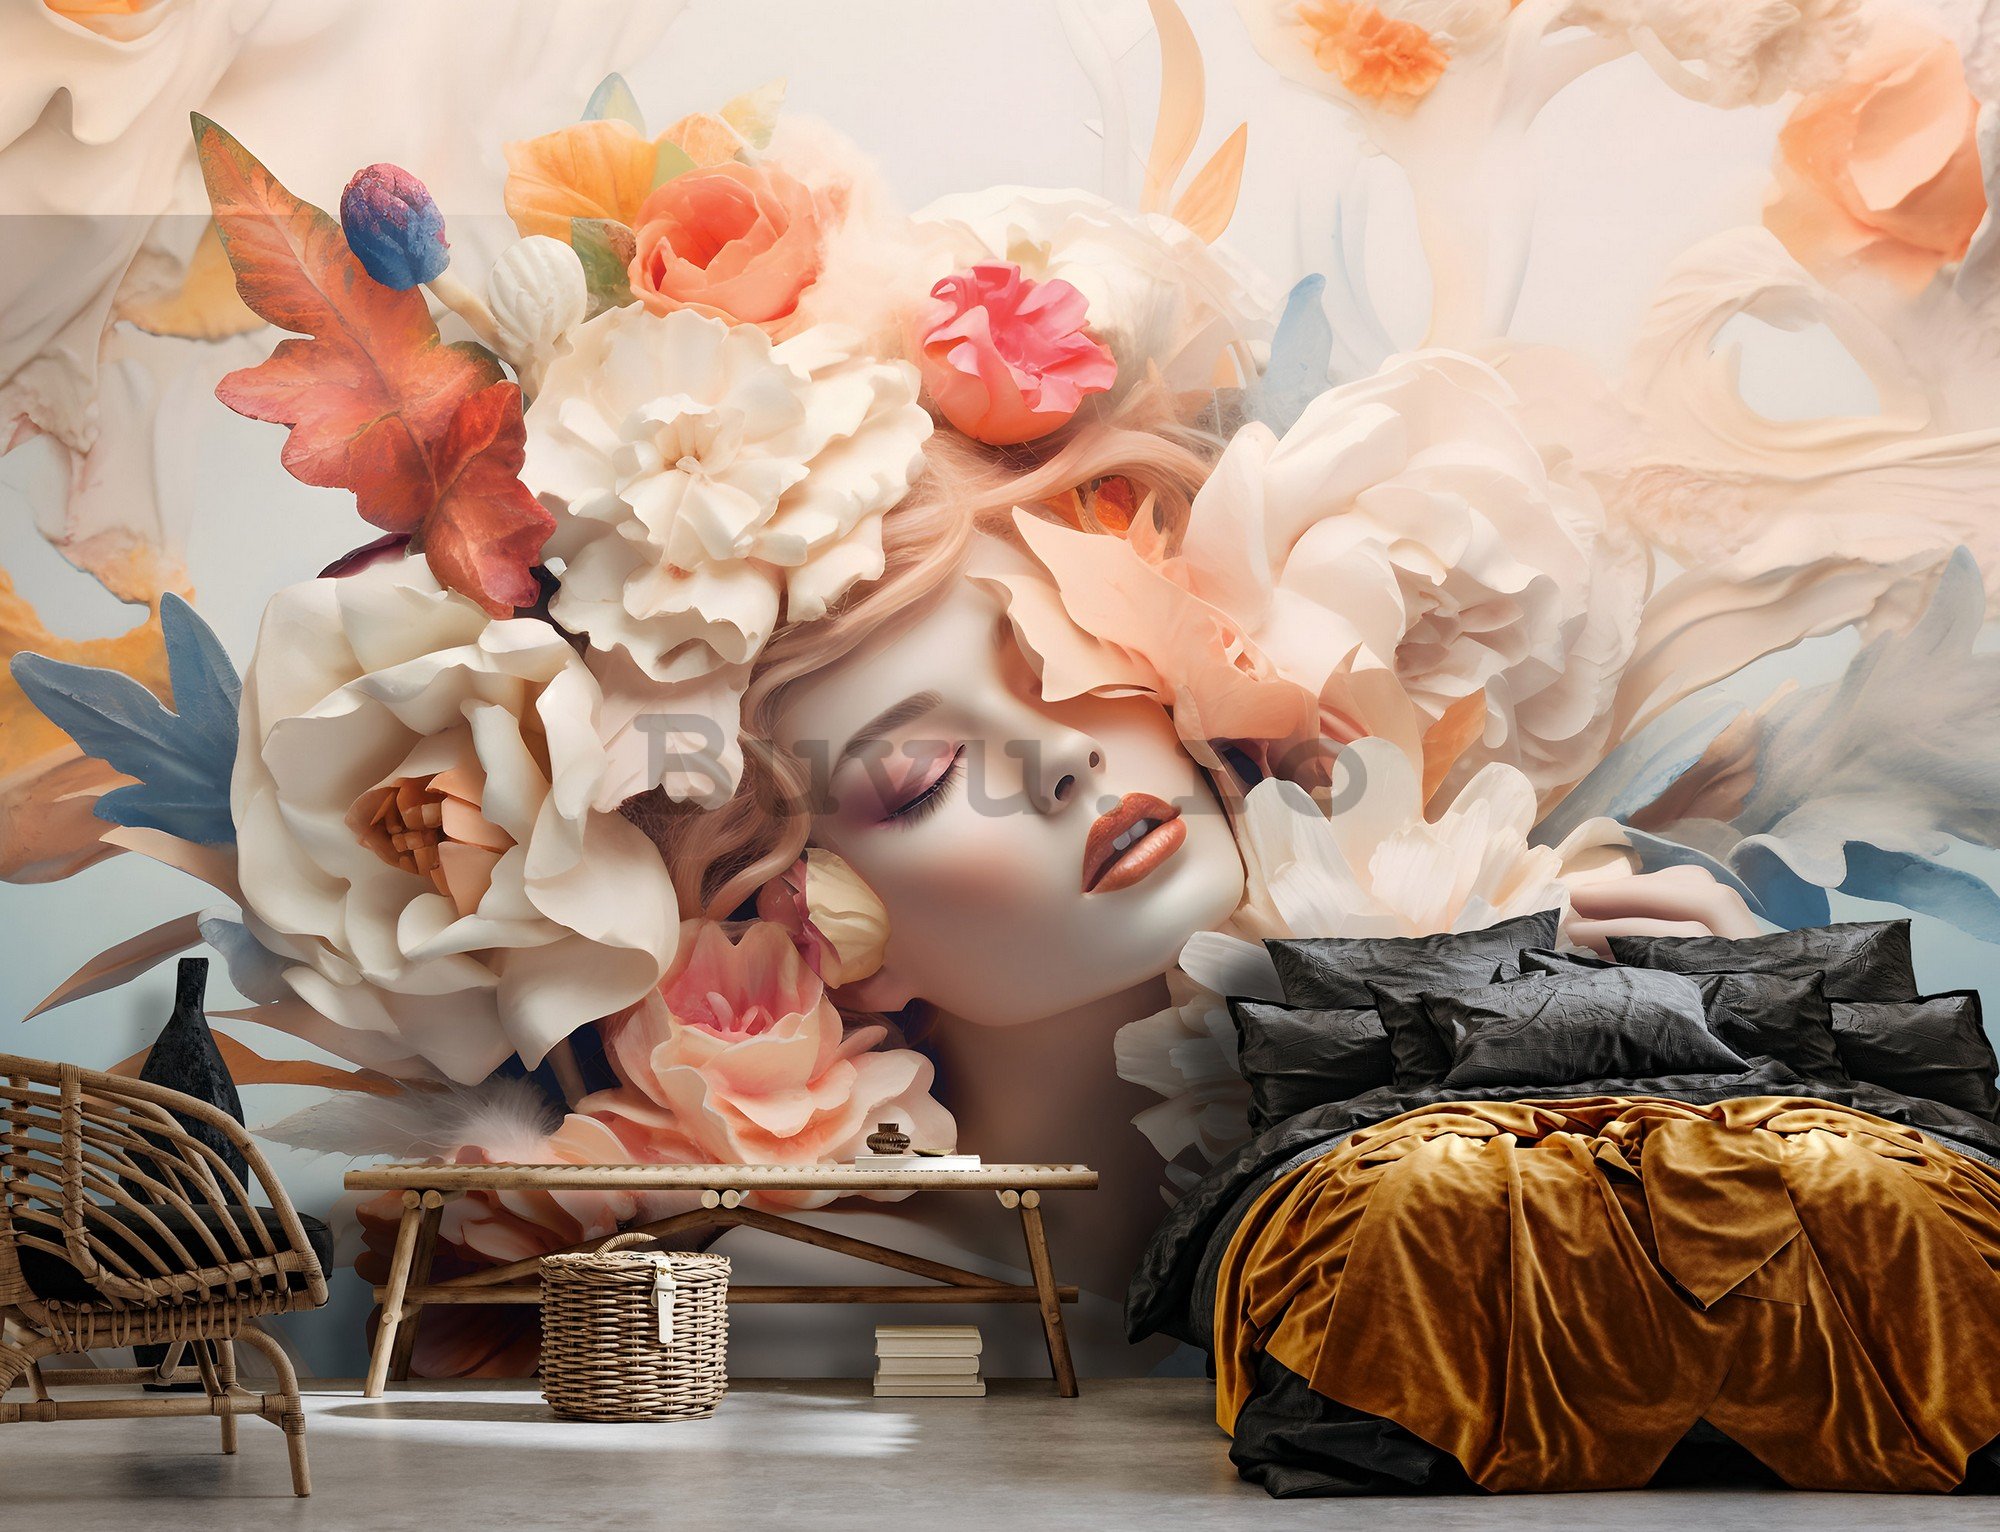 Fototapet vlies: Woman flowers pastel elegance - 208x146 cm